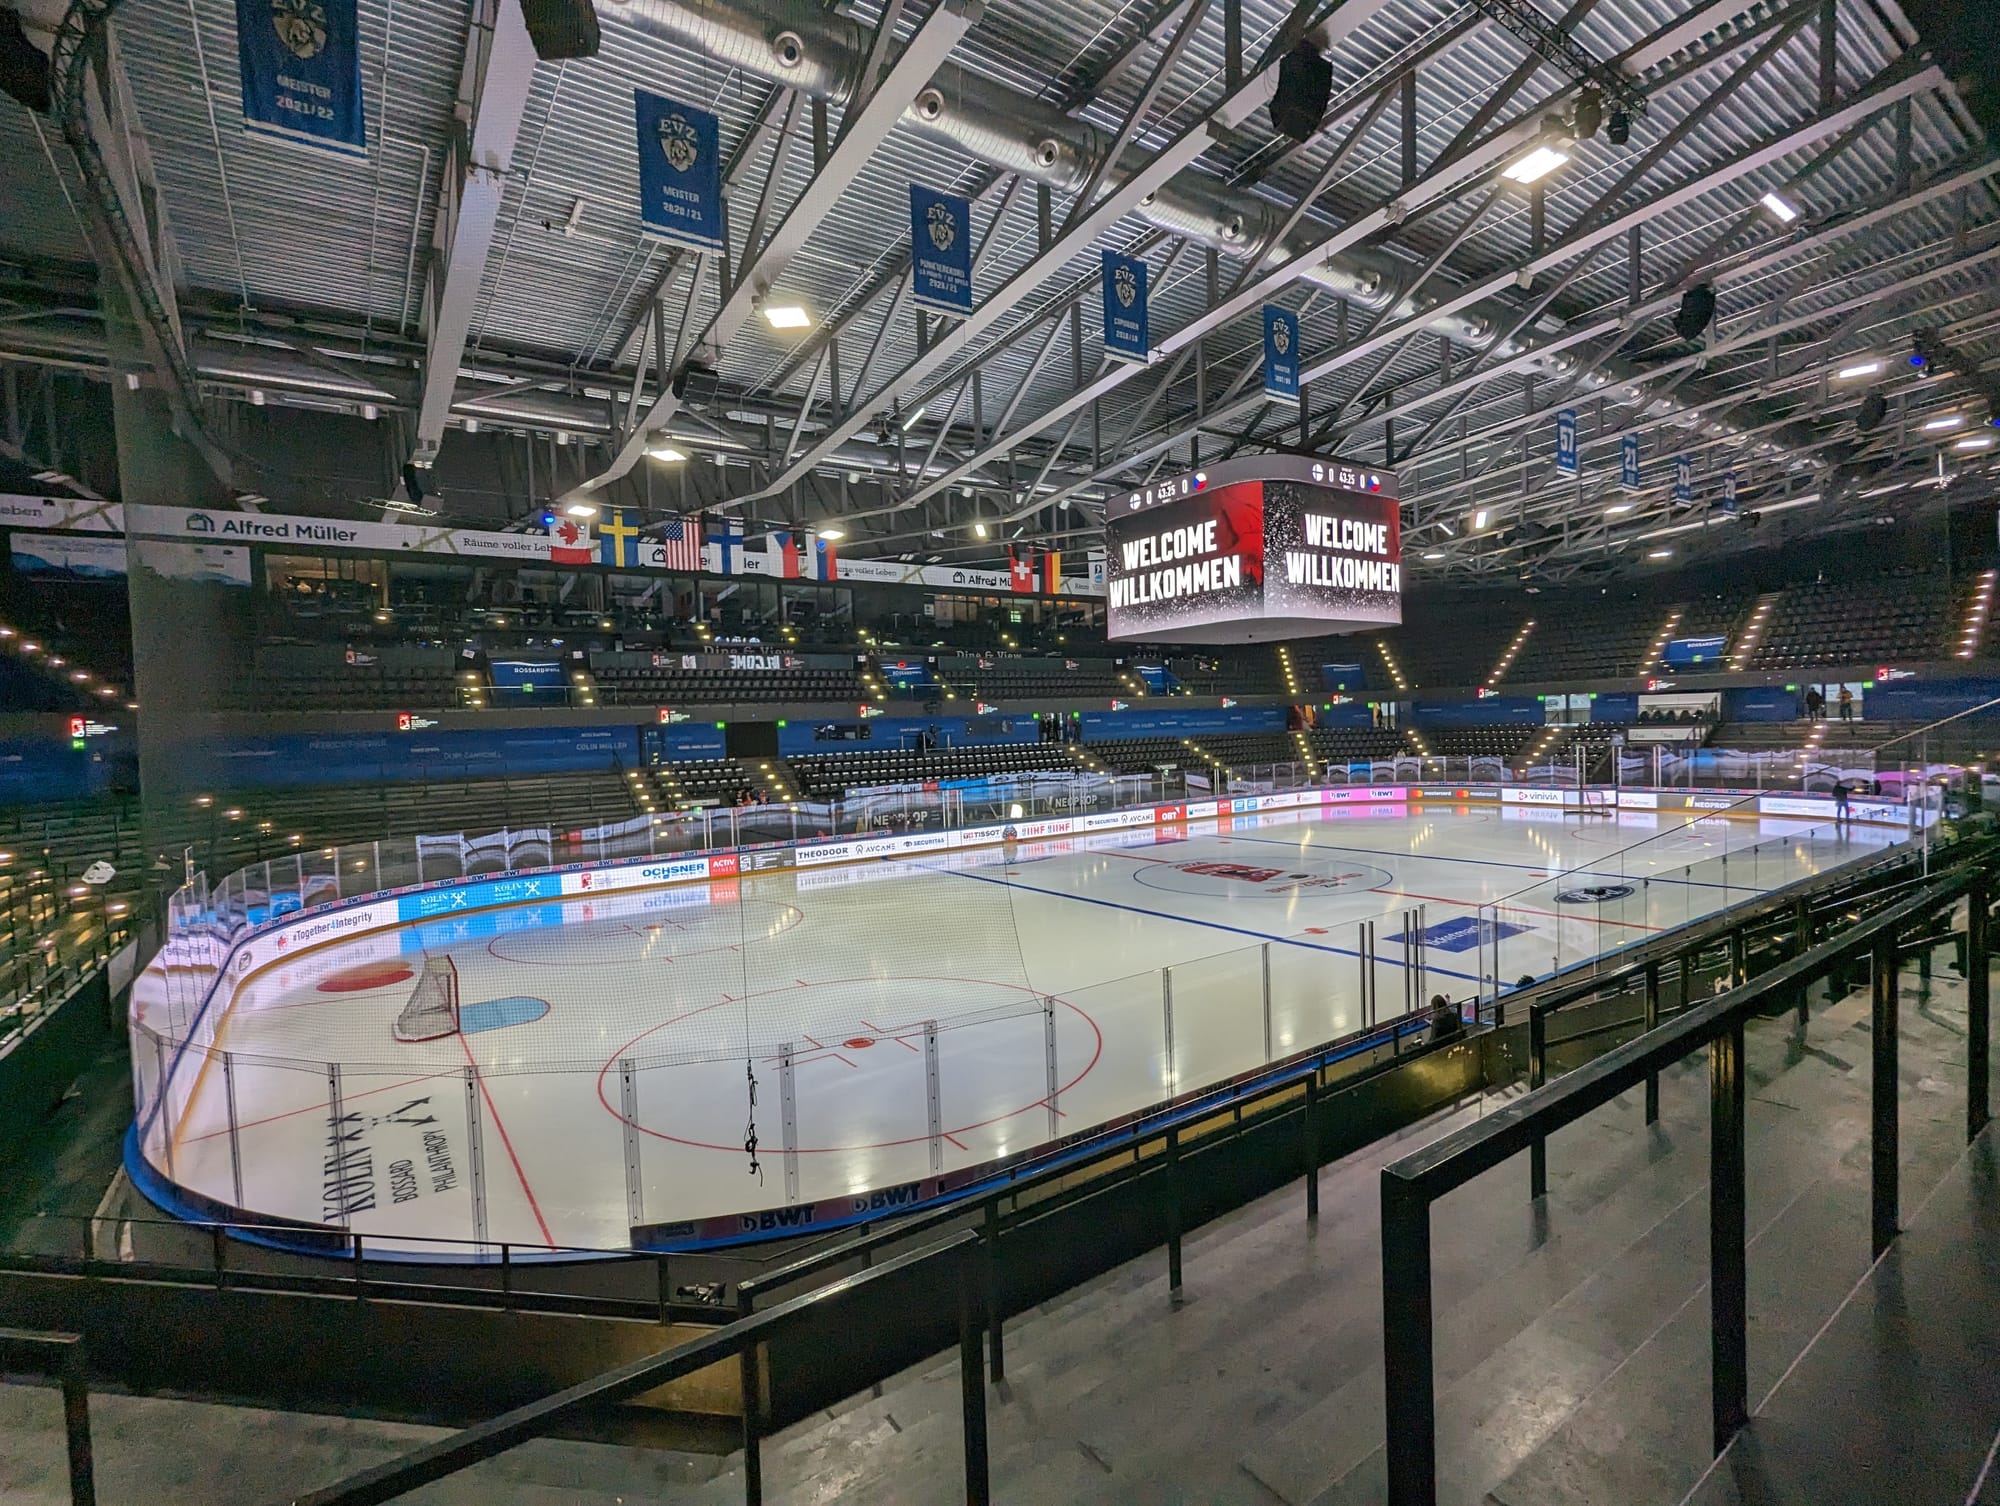 January 6 - IIHF U18 Women's World Championship: Postgame Videos